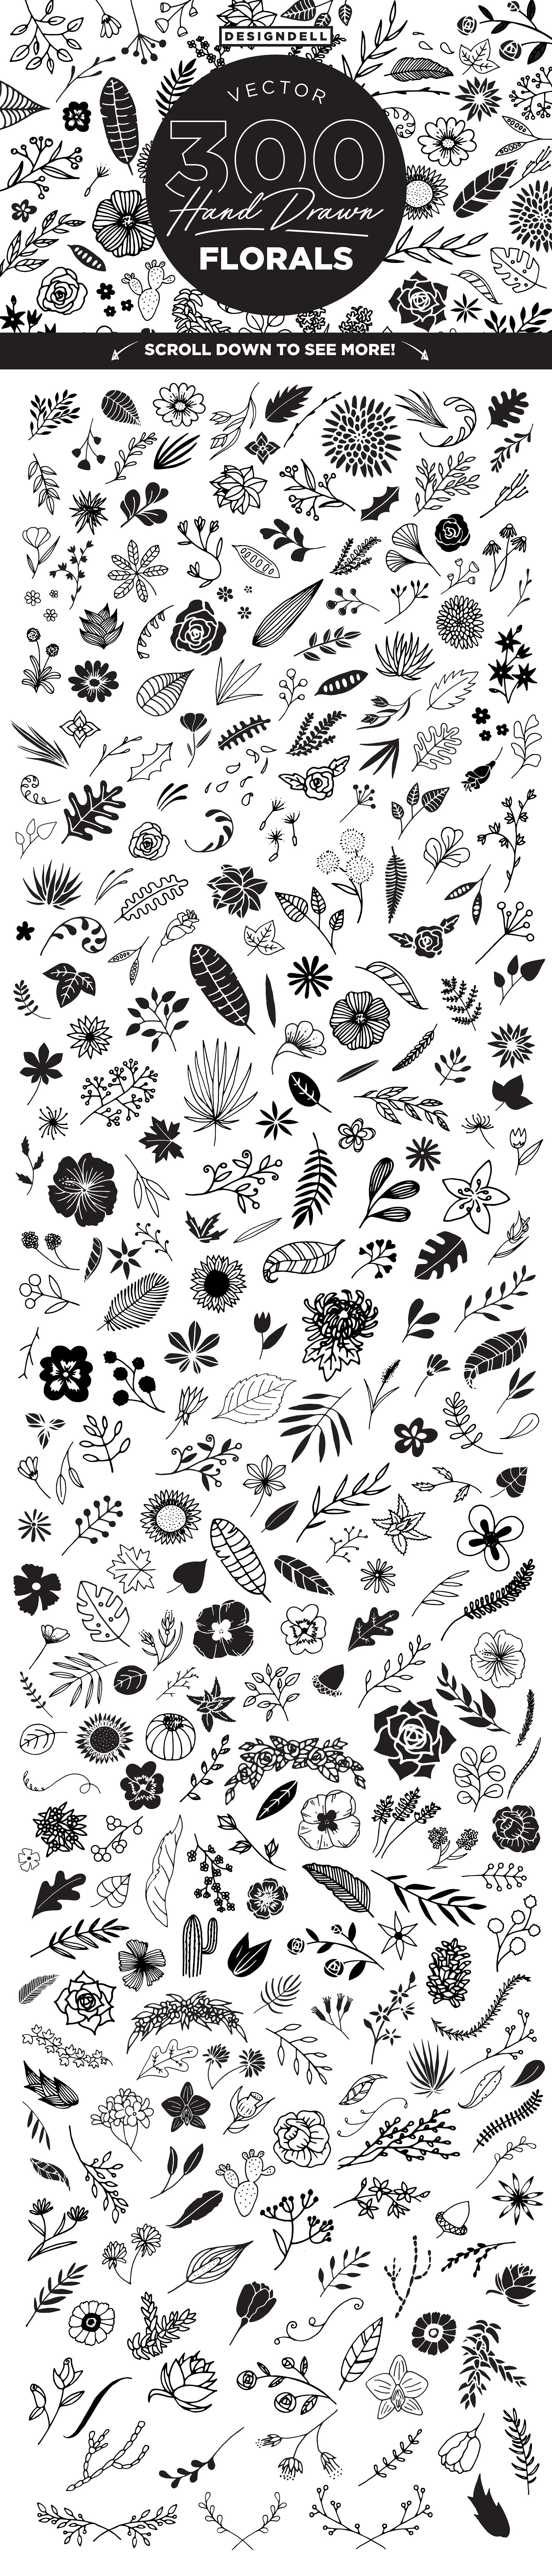 300幅手绘线条艺术风格花卉剪贴画 300 Hand Drawn Florals插图